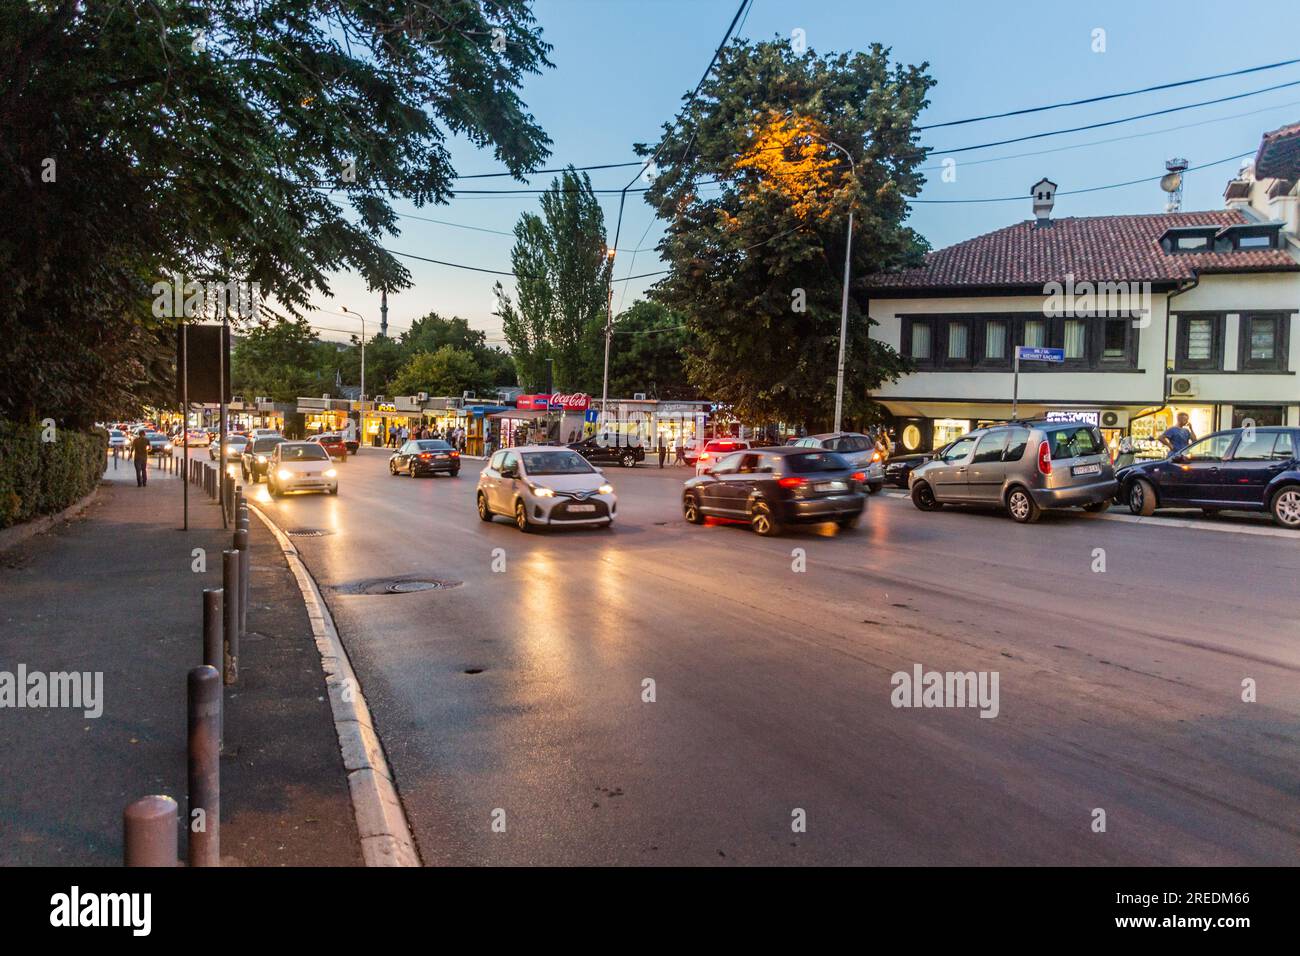 PRISTINA, KOSOVO - 13. AUGUST 2019: Abendlicher Straßenverkehr in Pristina, Kosovo Stockfoto